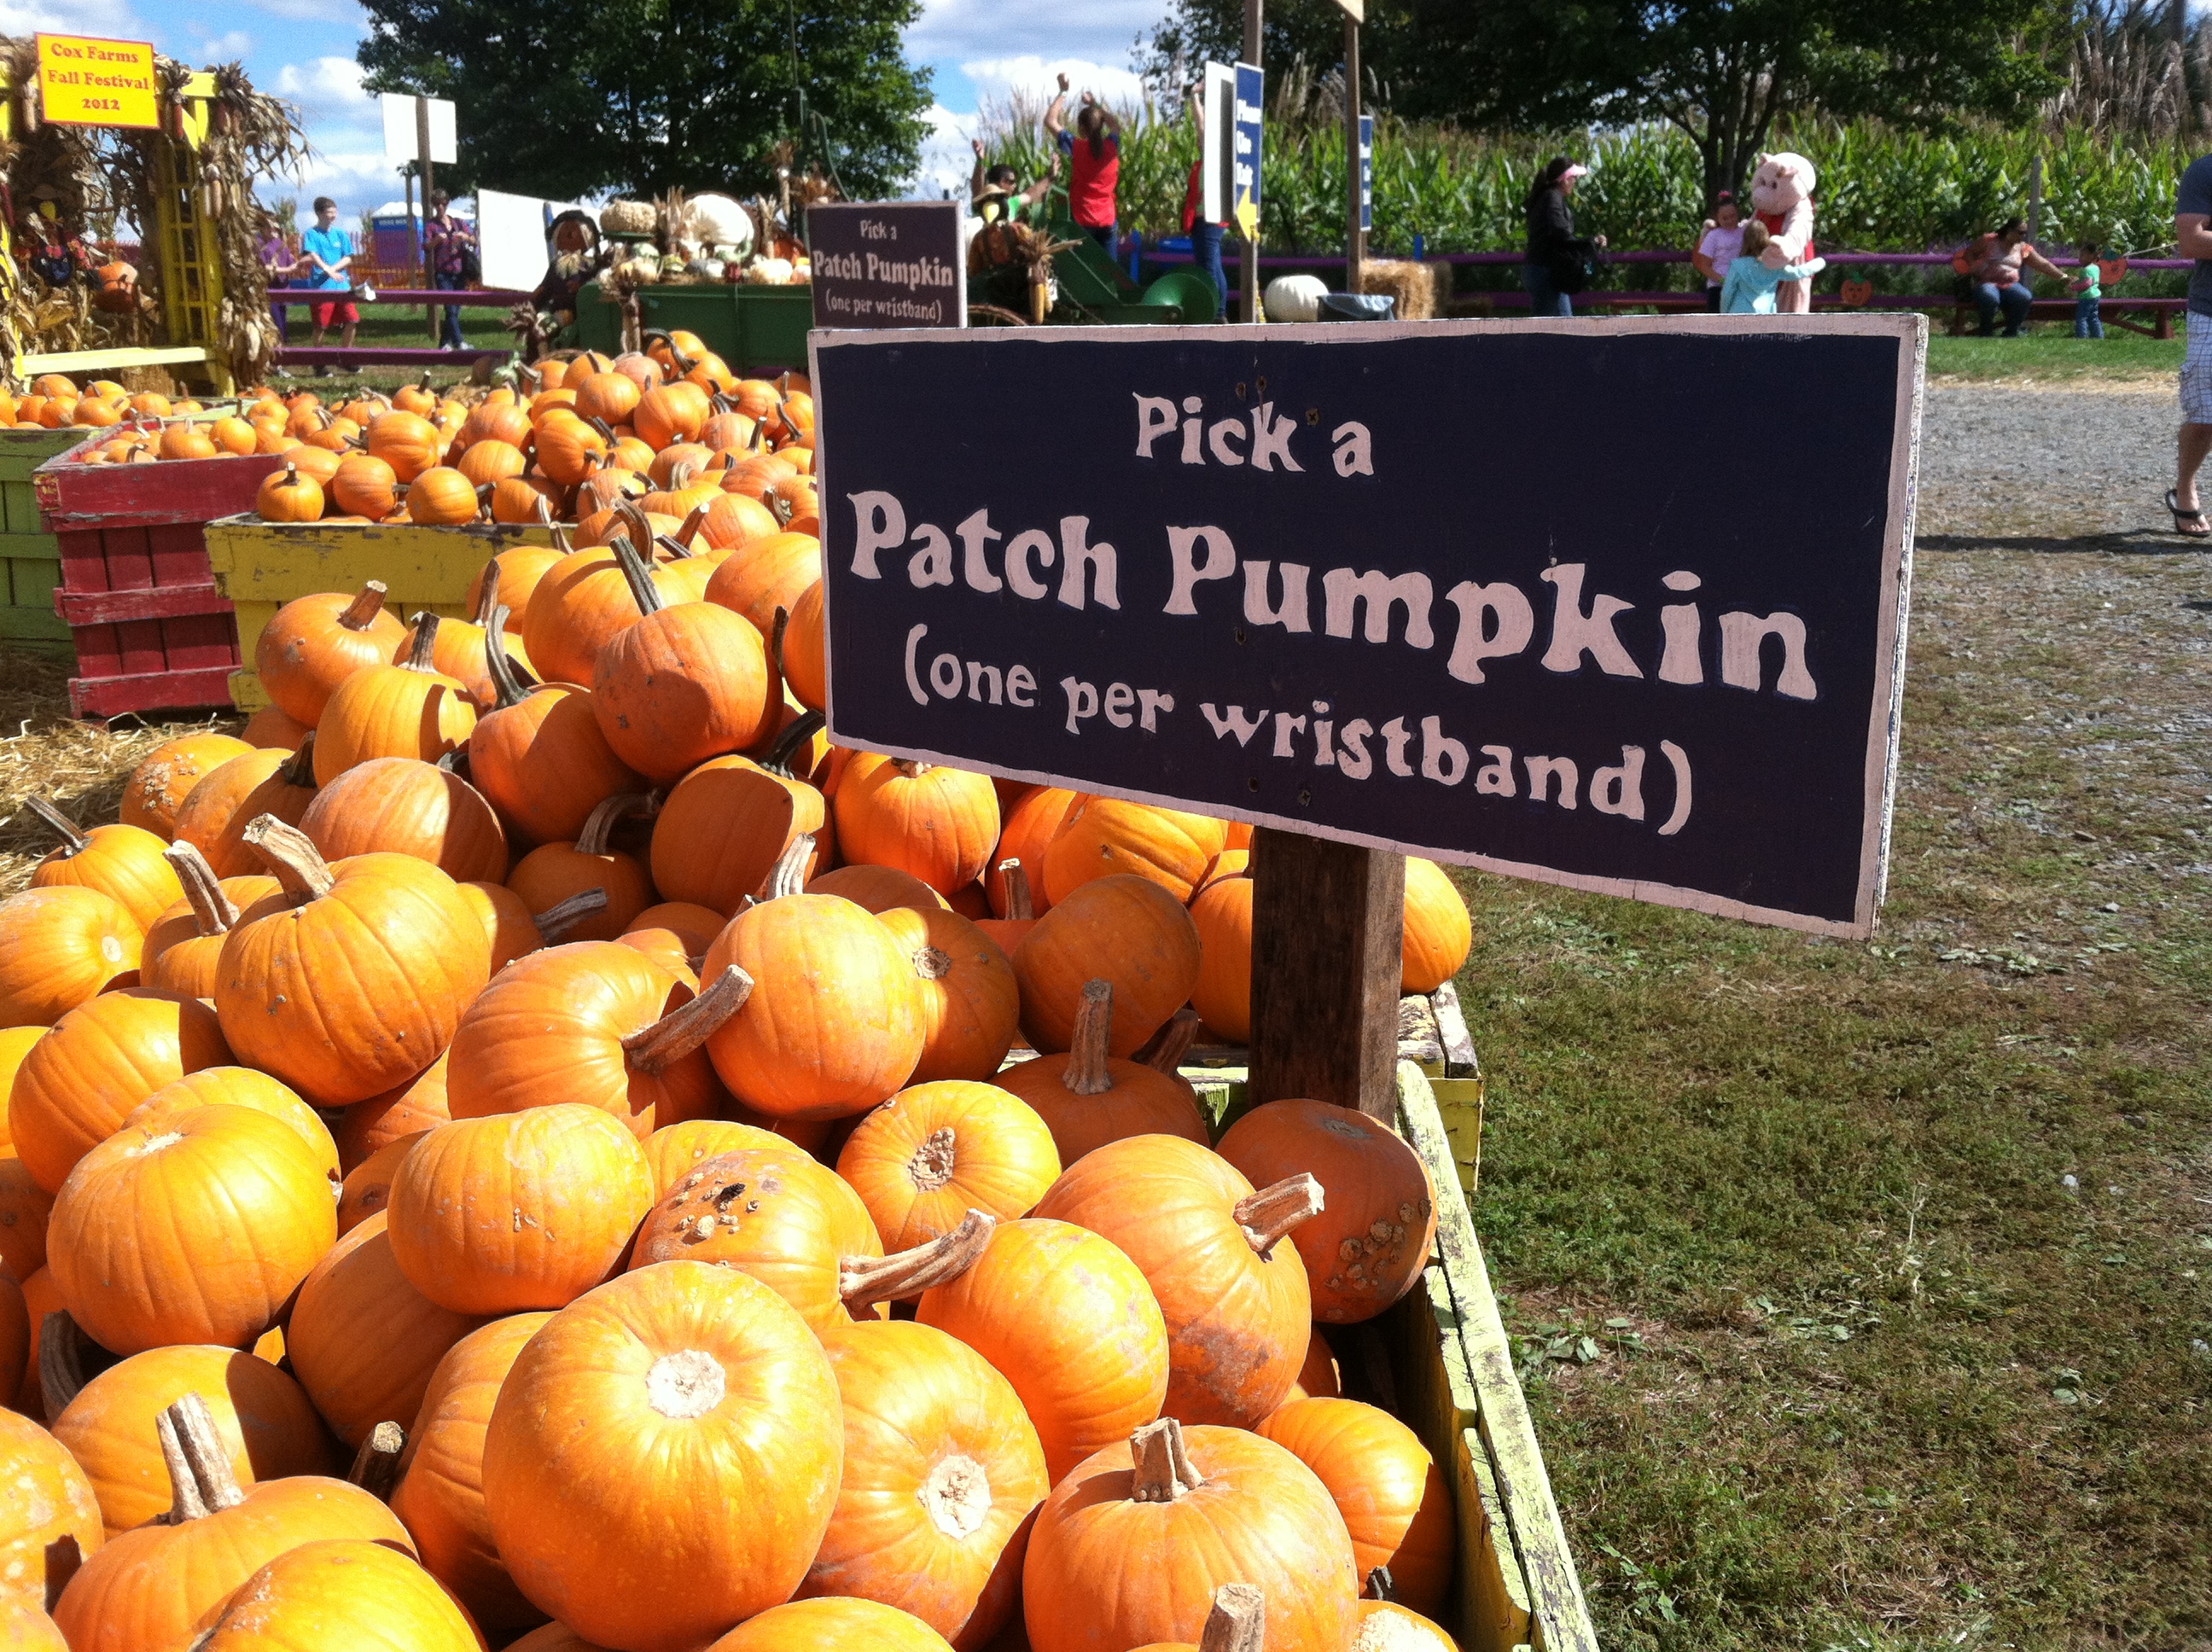 Pick a patch pumpkin at Cox Farms Fall Festival 2012